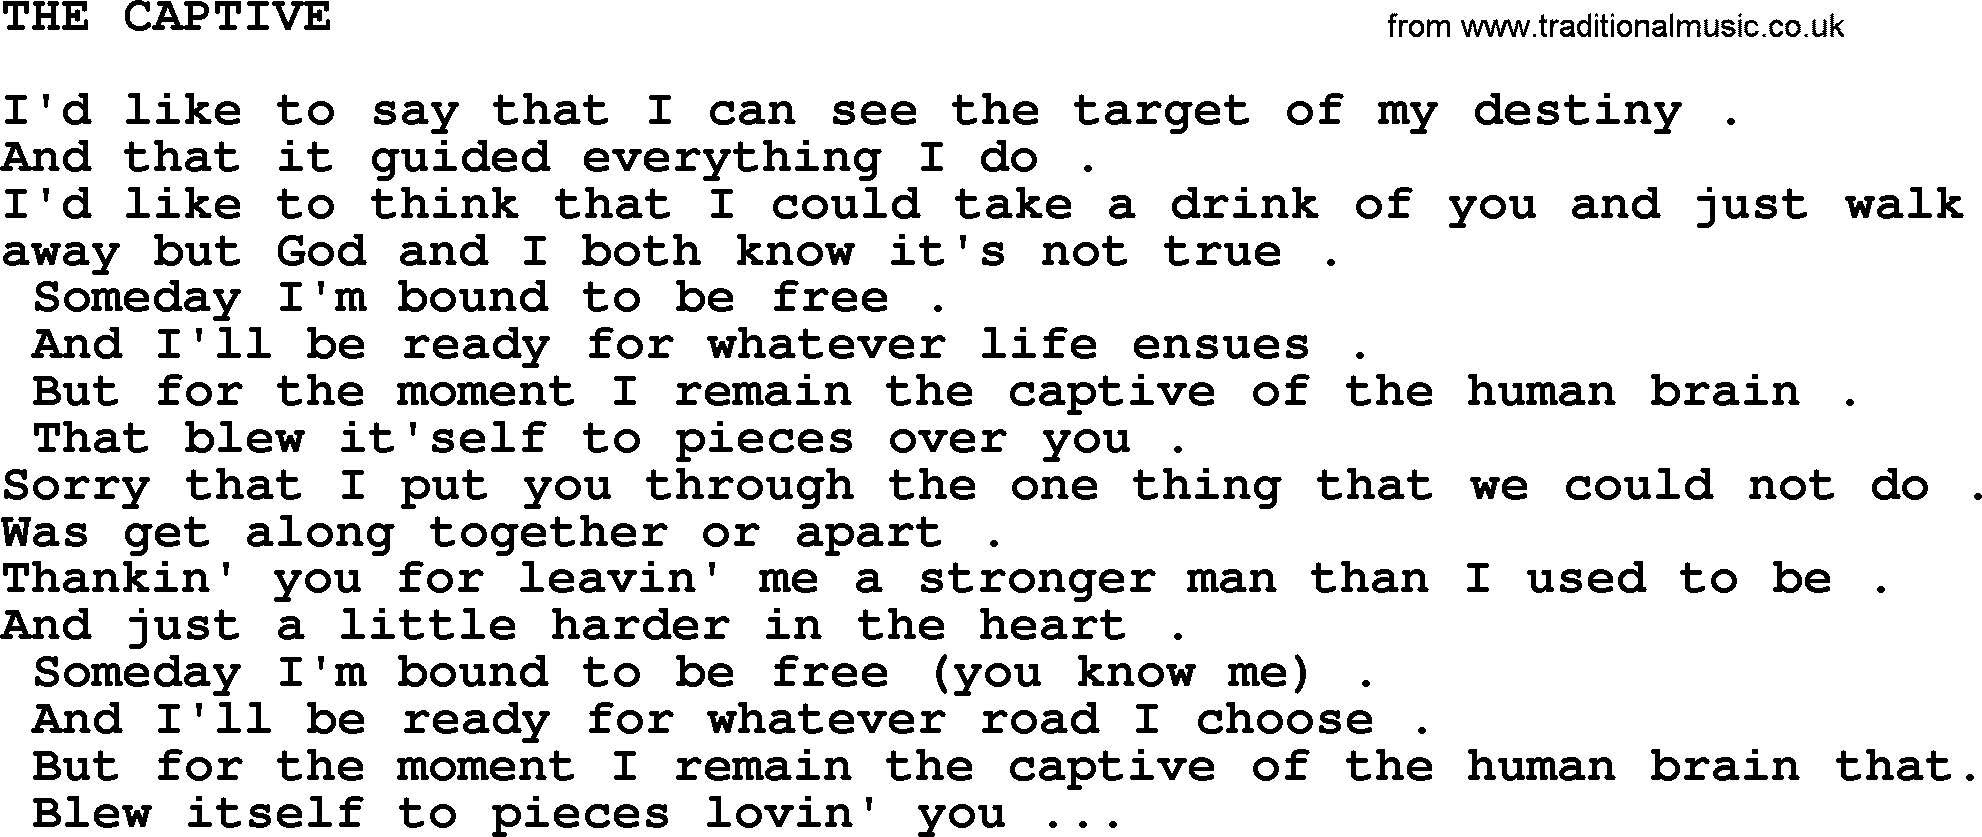 Kris Kristofferson song: The Captive lyrics